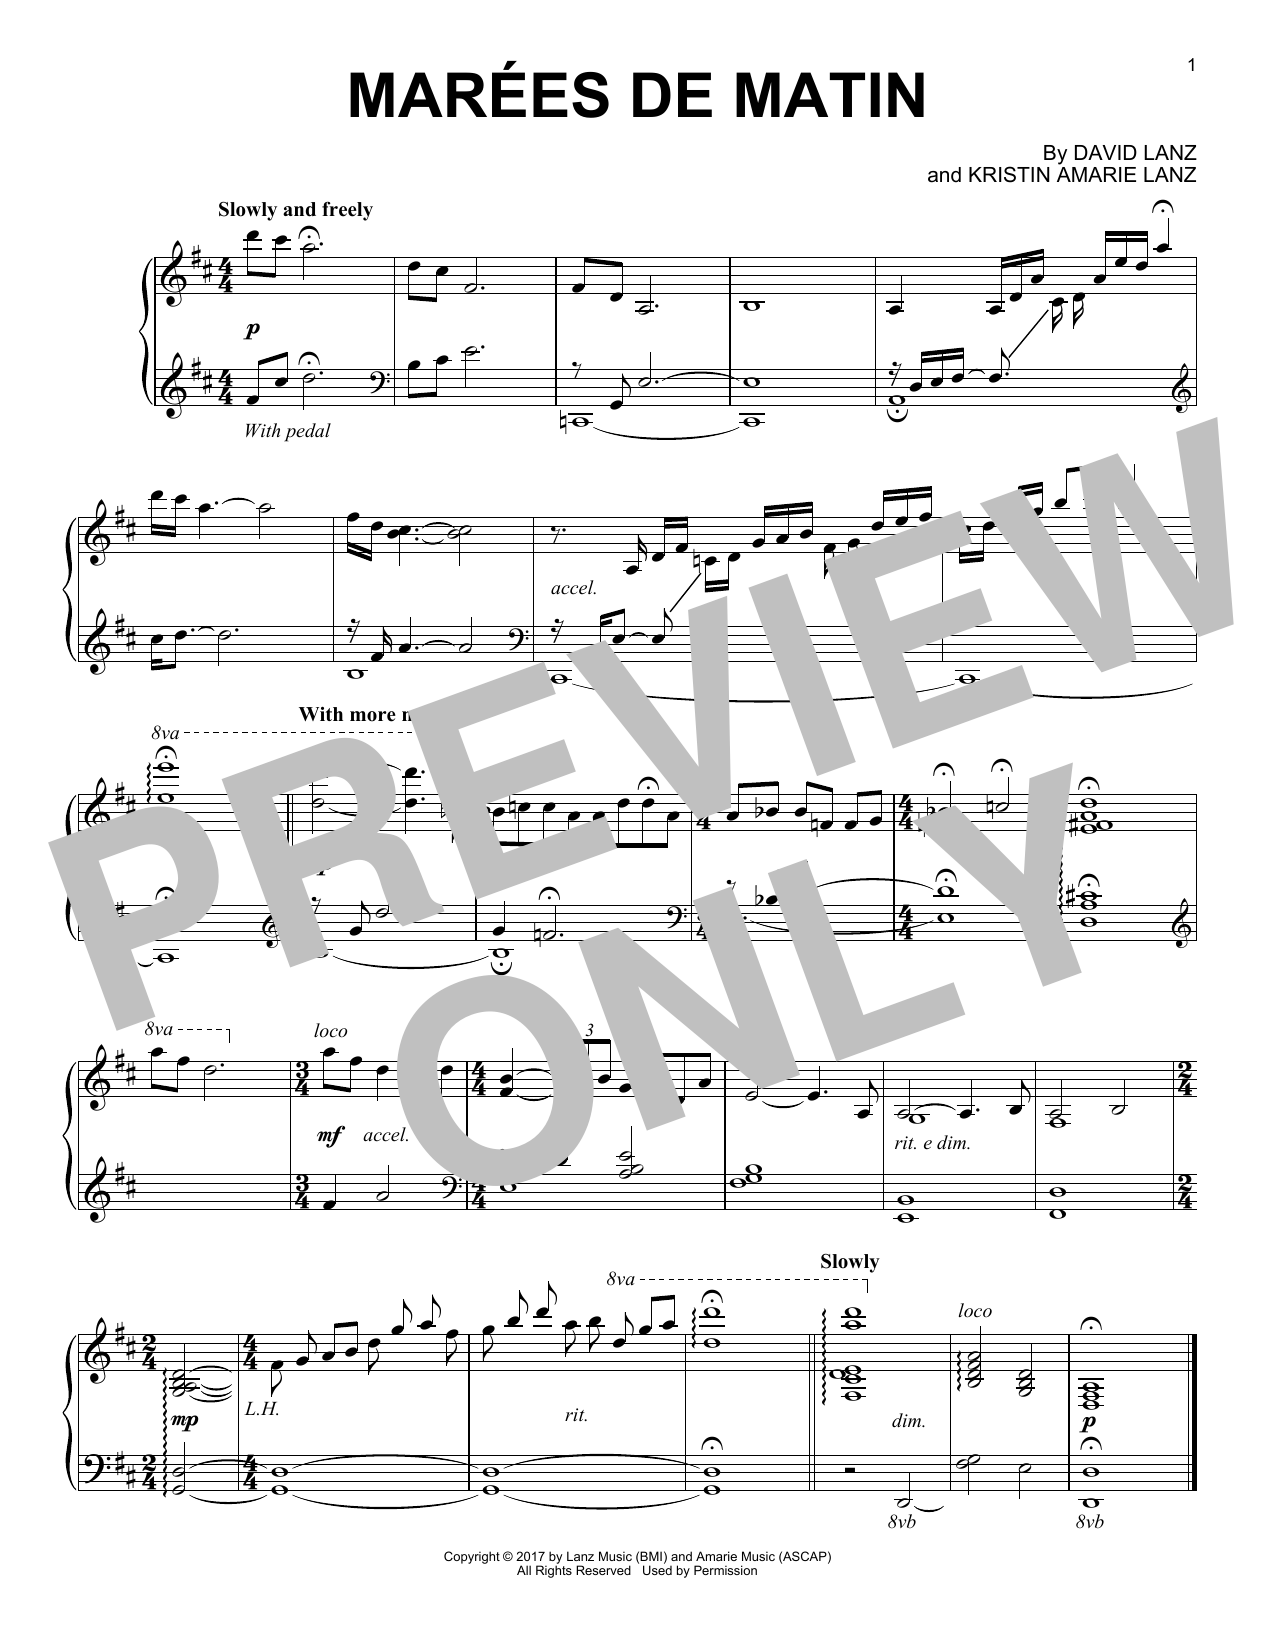 David Lanz Marées de Matin Sheet Music Notes & Chords for Piano Solo - Download or Print PDF